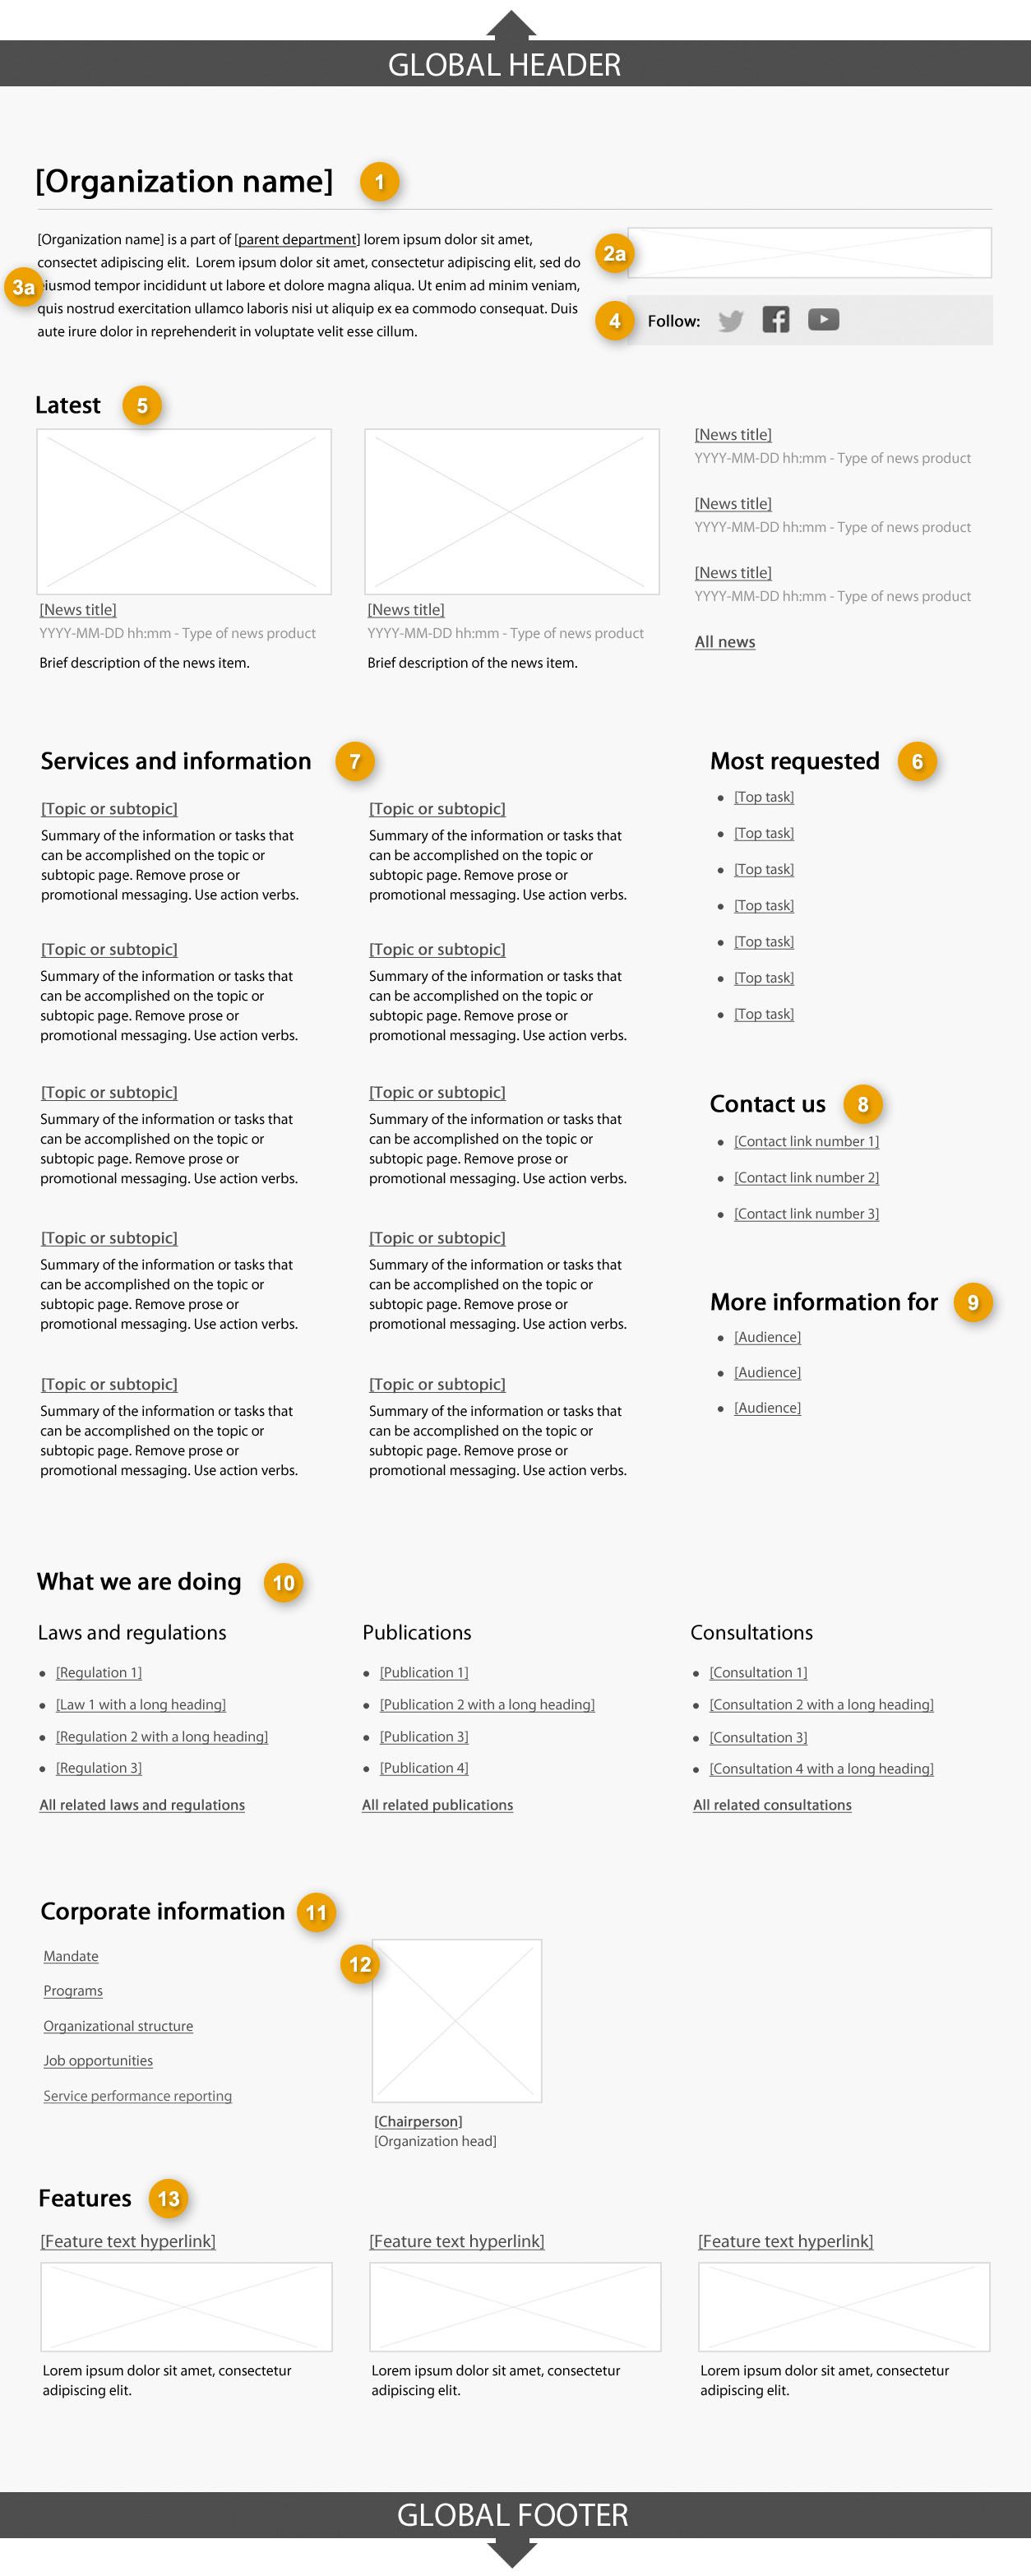 organizational-profile-pages-mandatory-template-canada-ca